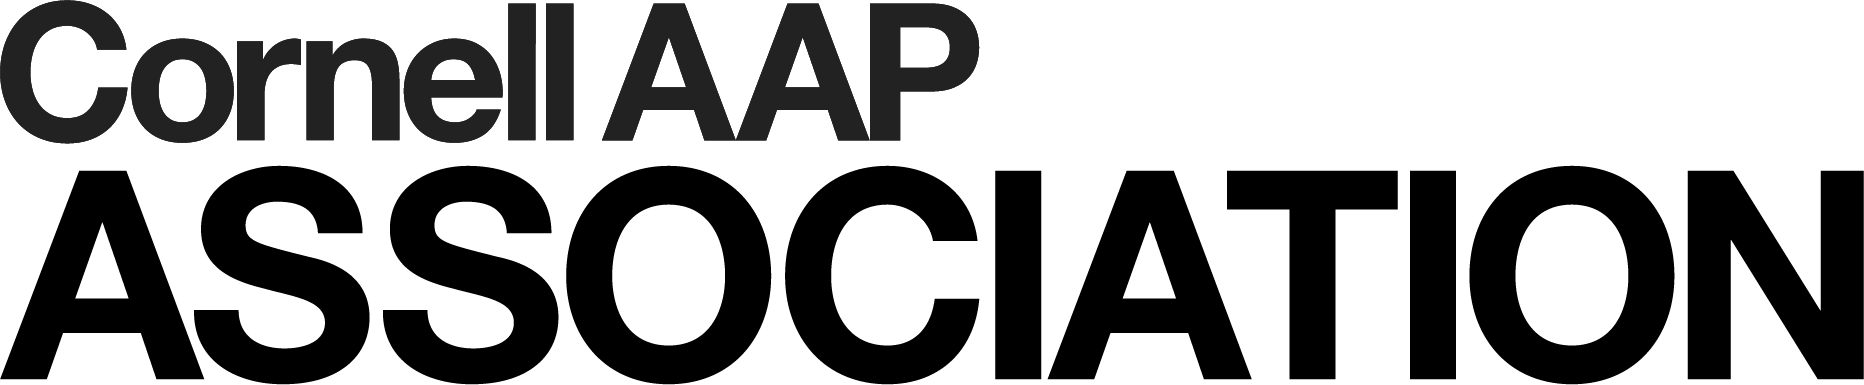 Logo for Association